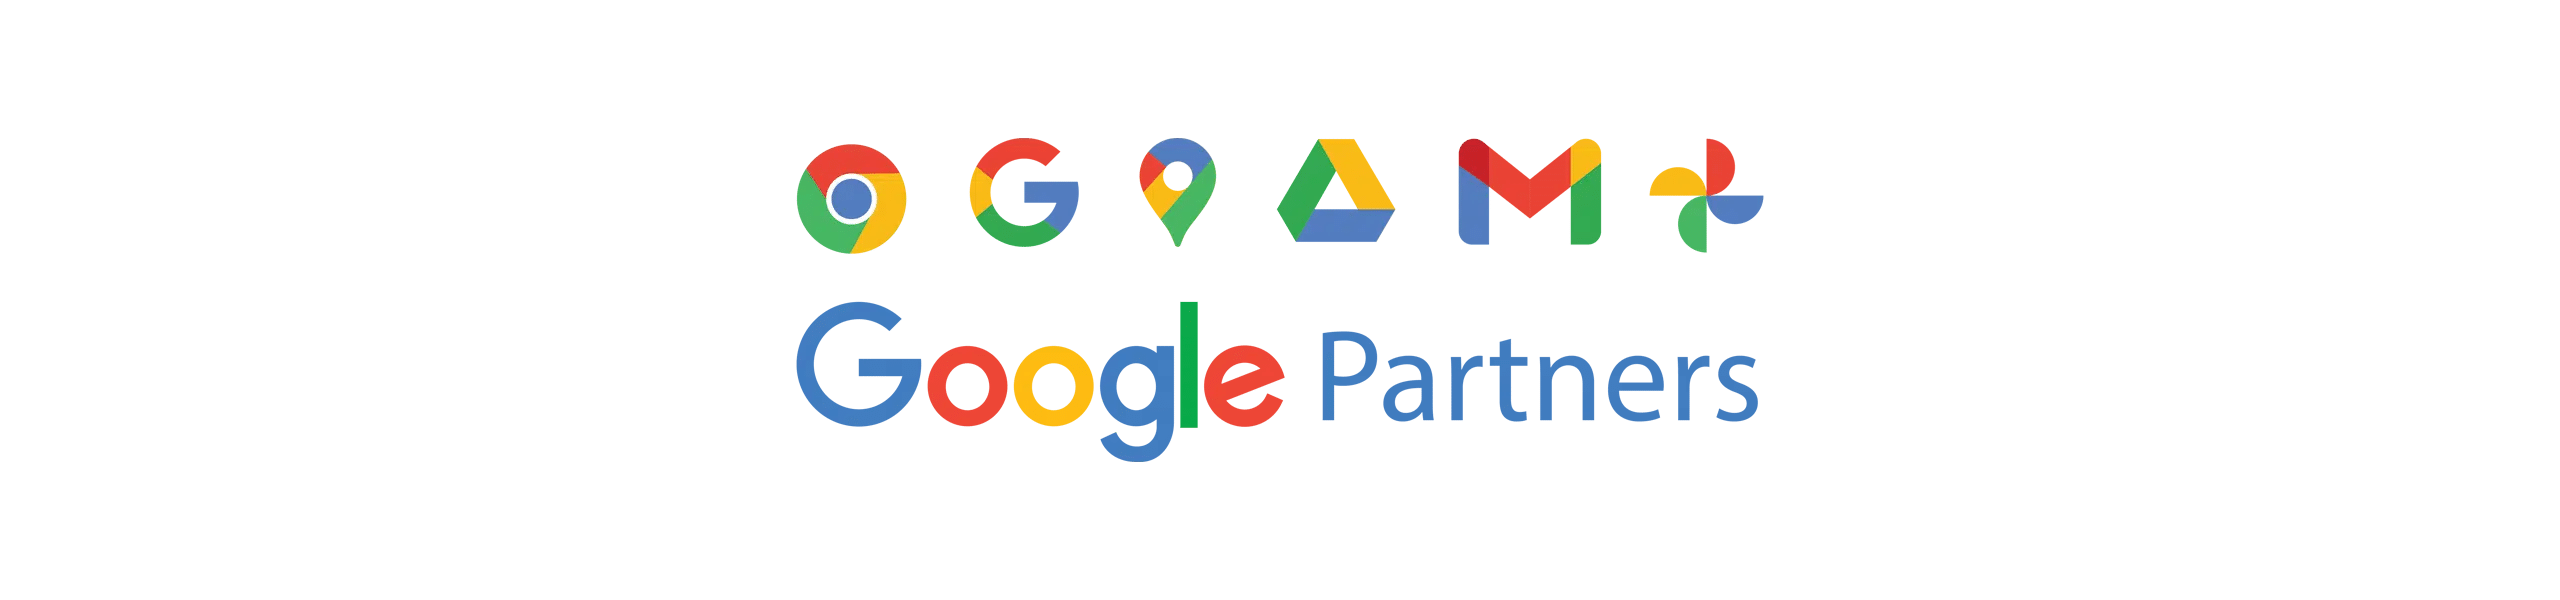 google partners logos Ogden UT